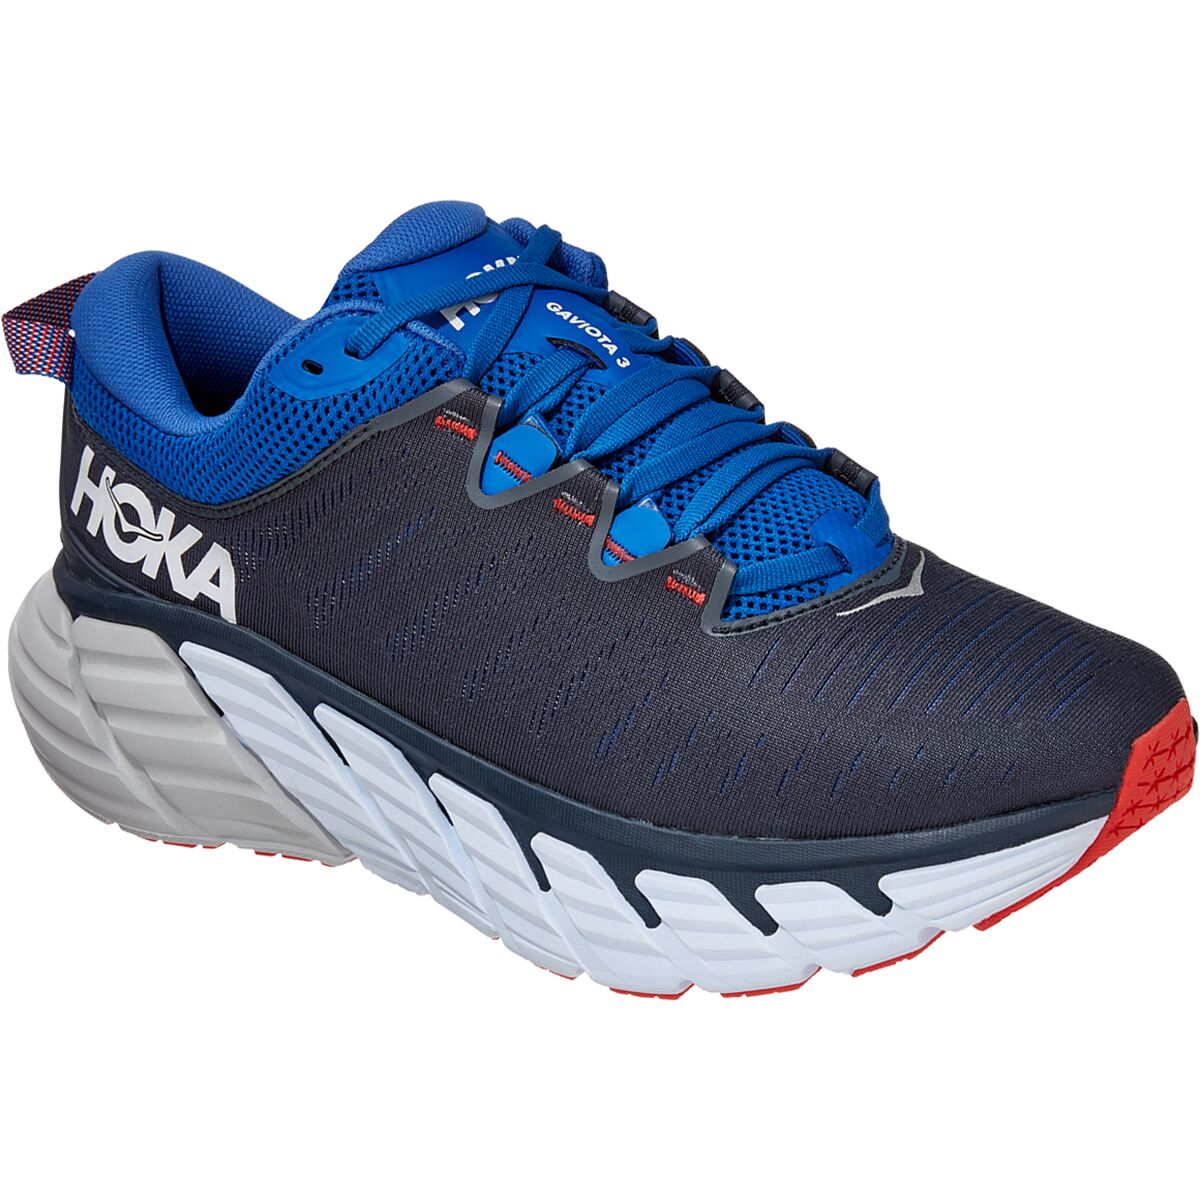 HOKA ONE ONE Gaviota 3 Running Shoe - Men's | Backcountry.com